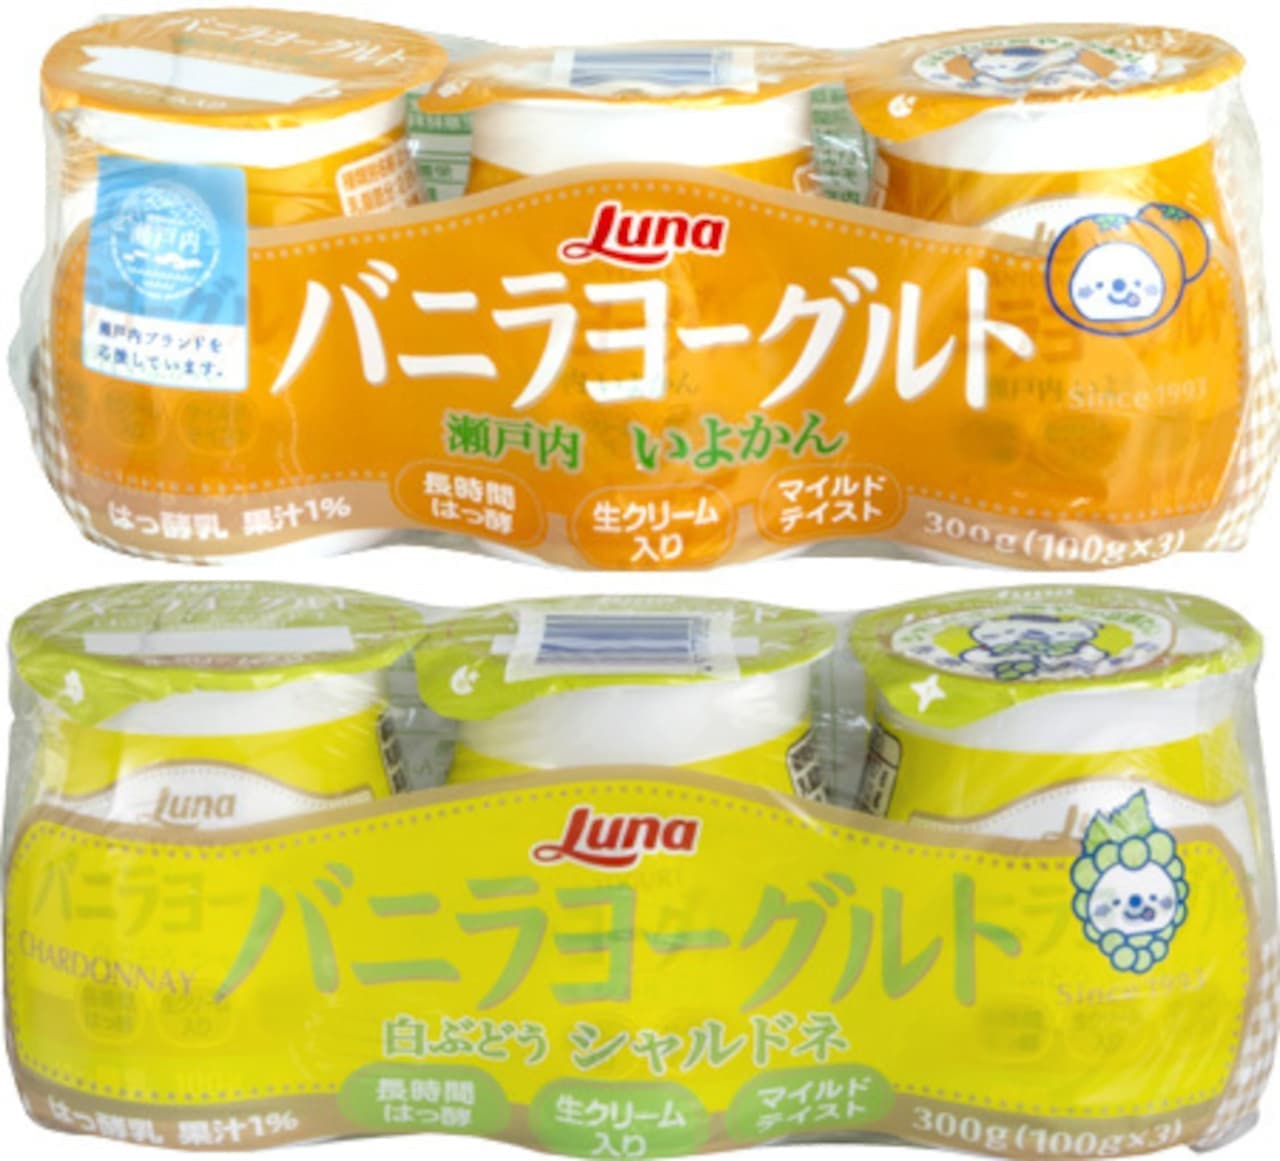 Japanese Luna "Vanilla Yogurt Setouchi Iyokan" "Vanilla Yogurt White Grape Chardonnay"